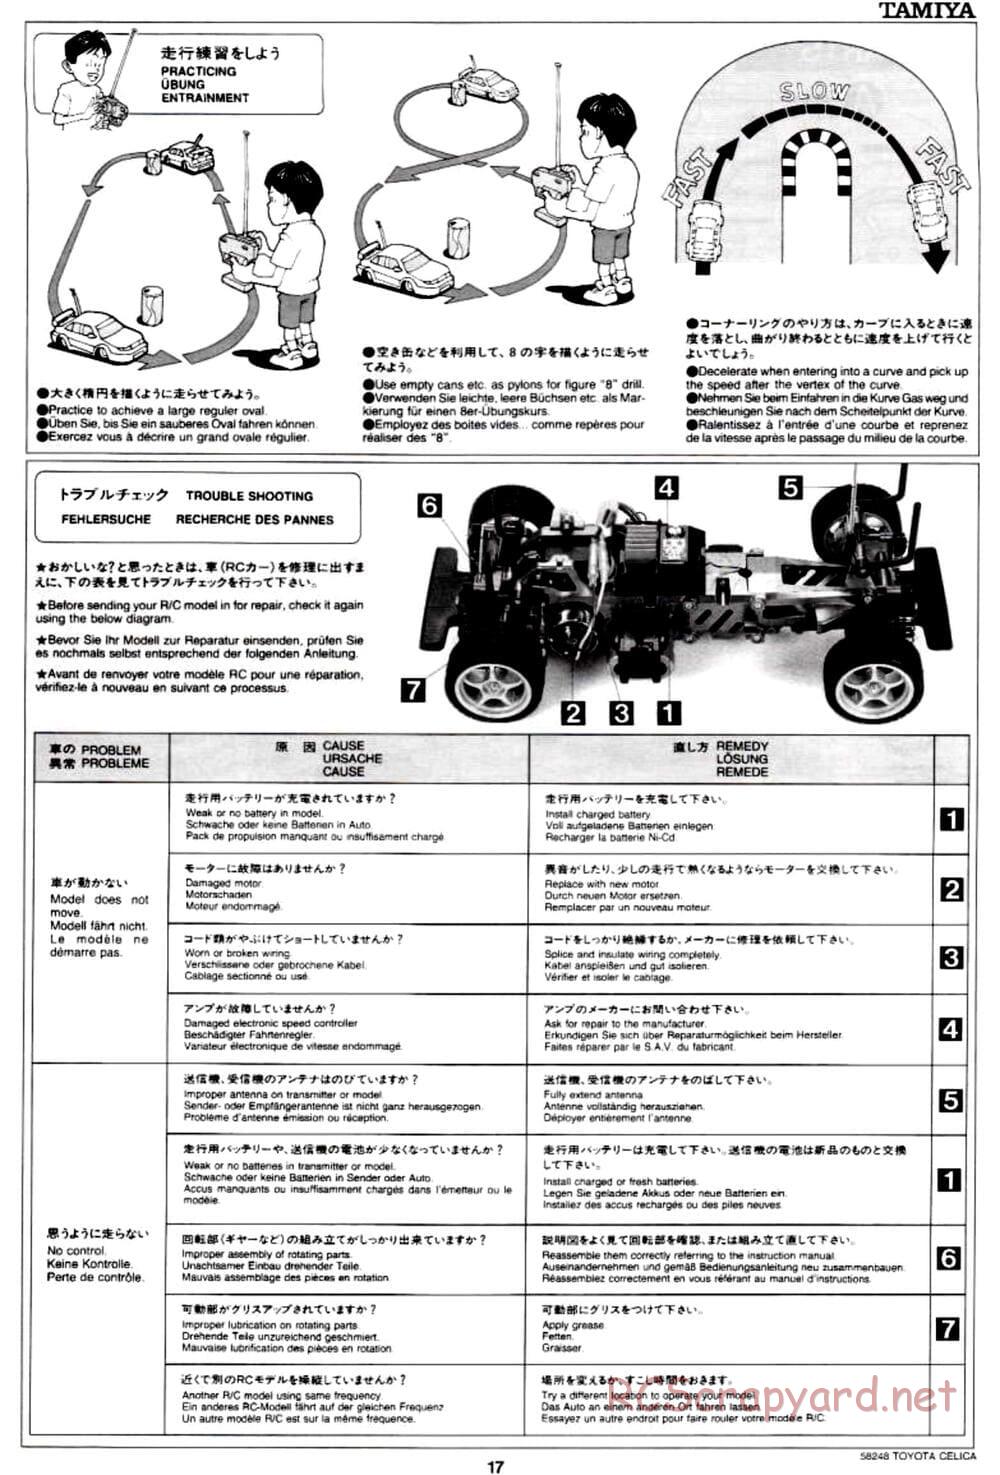 Tamiya - Toyota Celica - FF-02 Chassis - Manual - Page 17